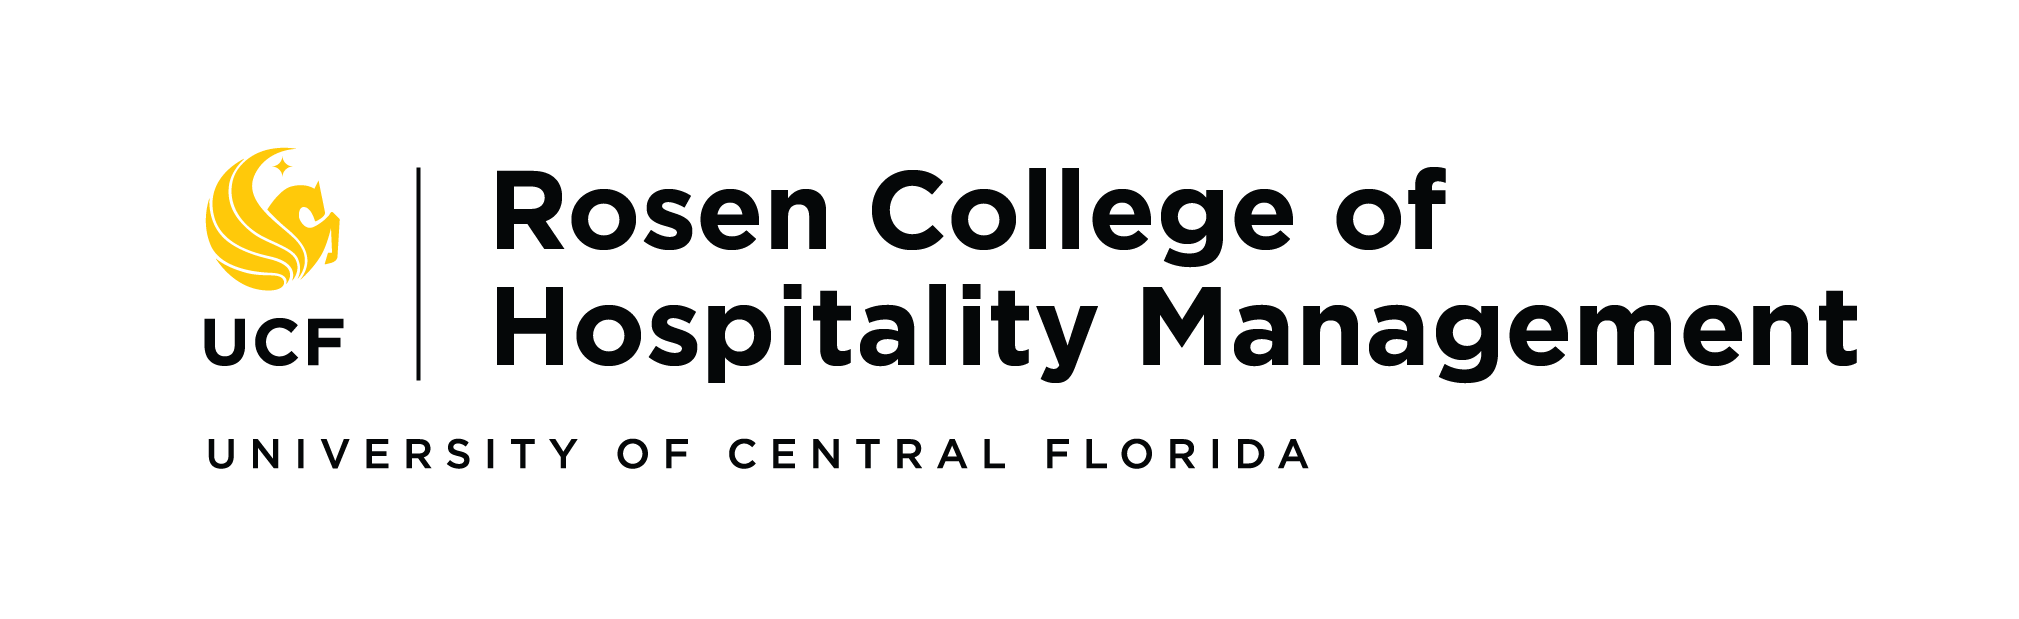 University of Central Florida, Rosen College logo